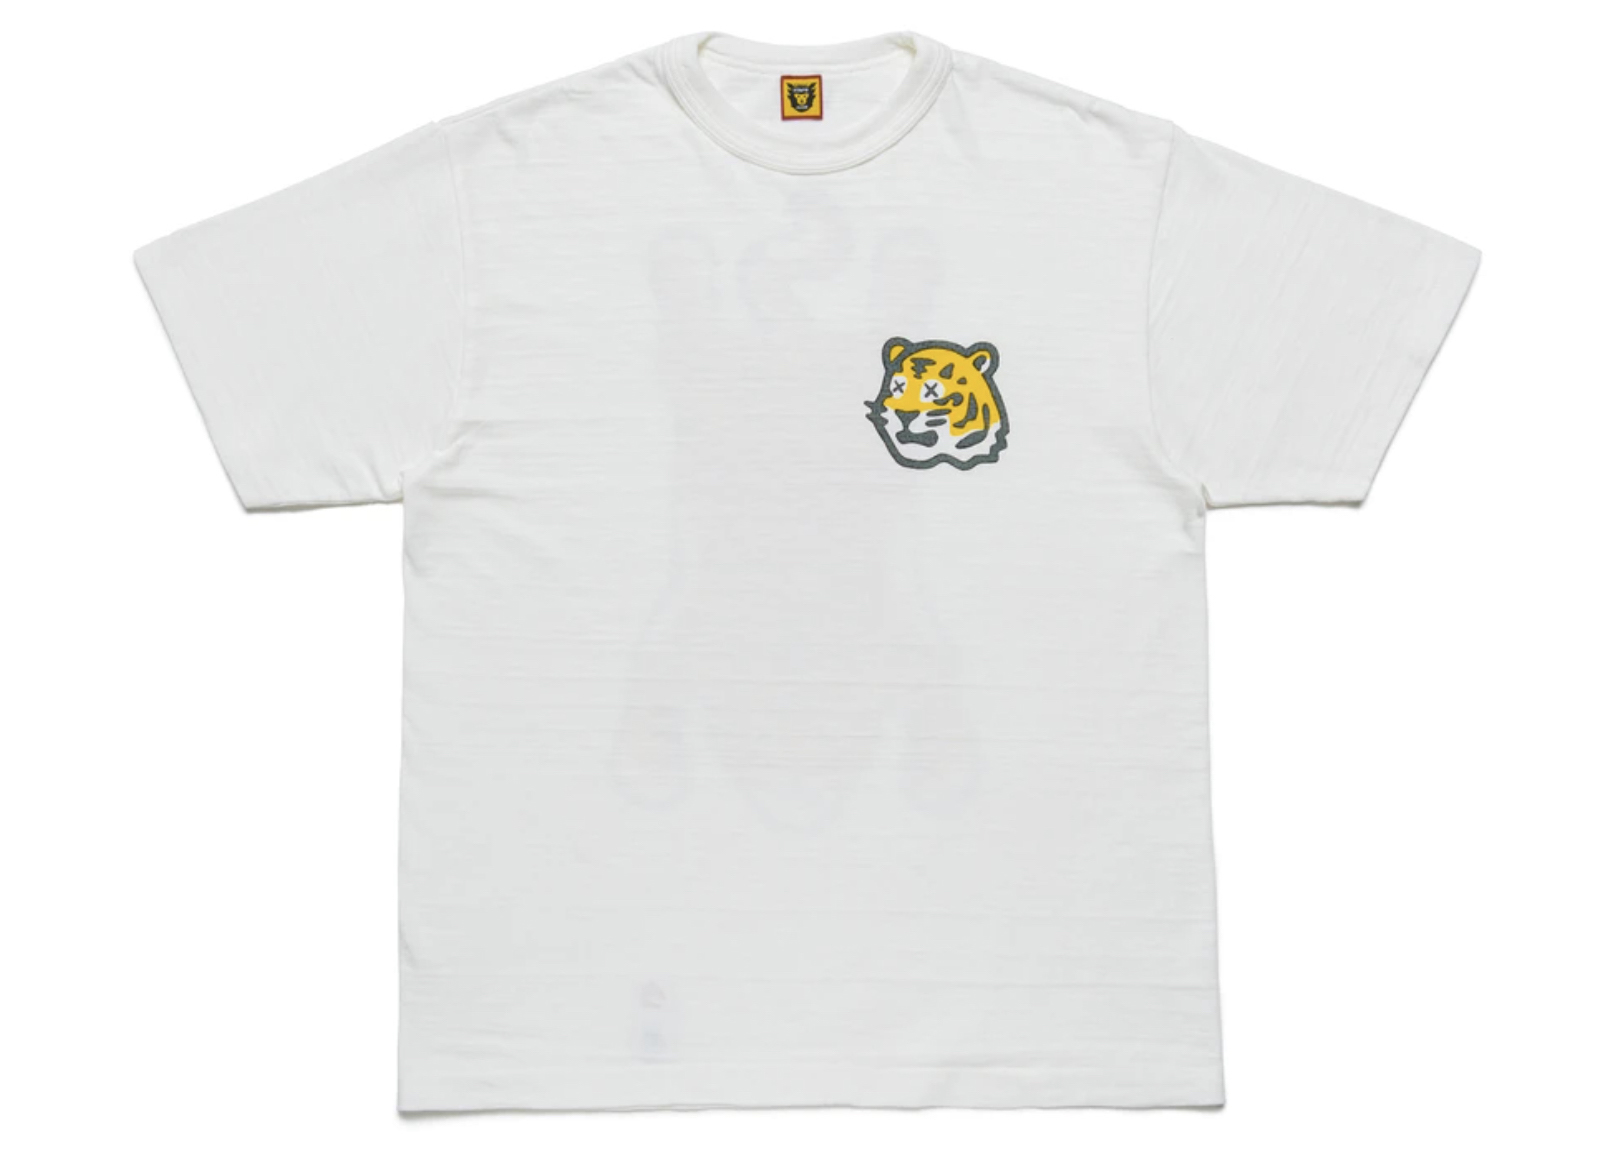 Human Made x KAWS #4 T-shirt White メンズ - SS21 - JP